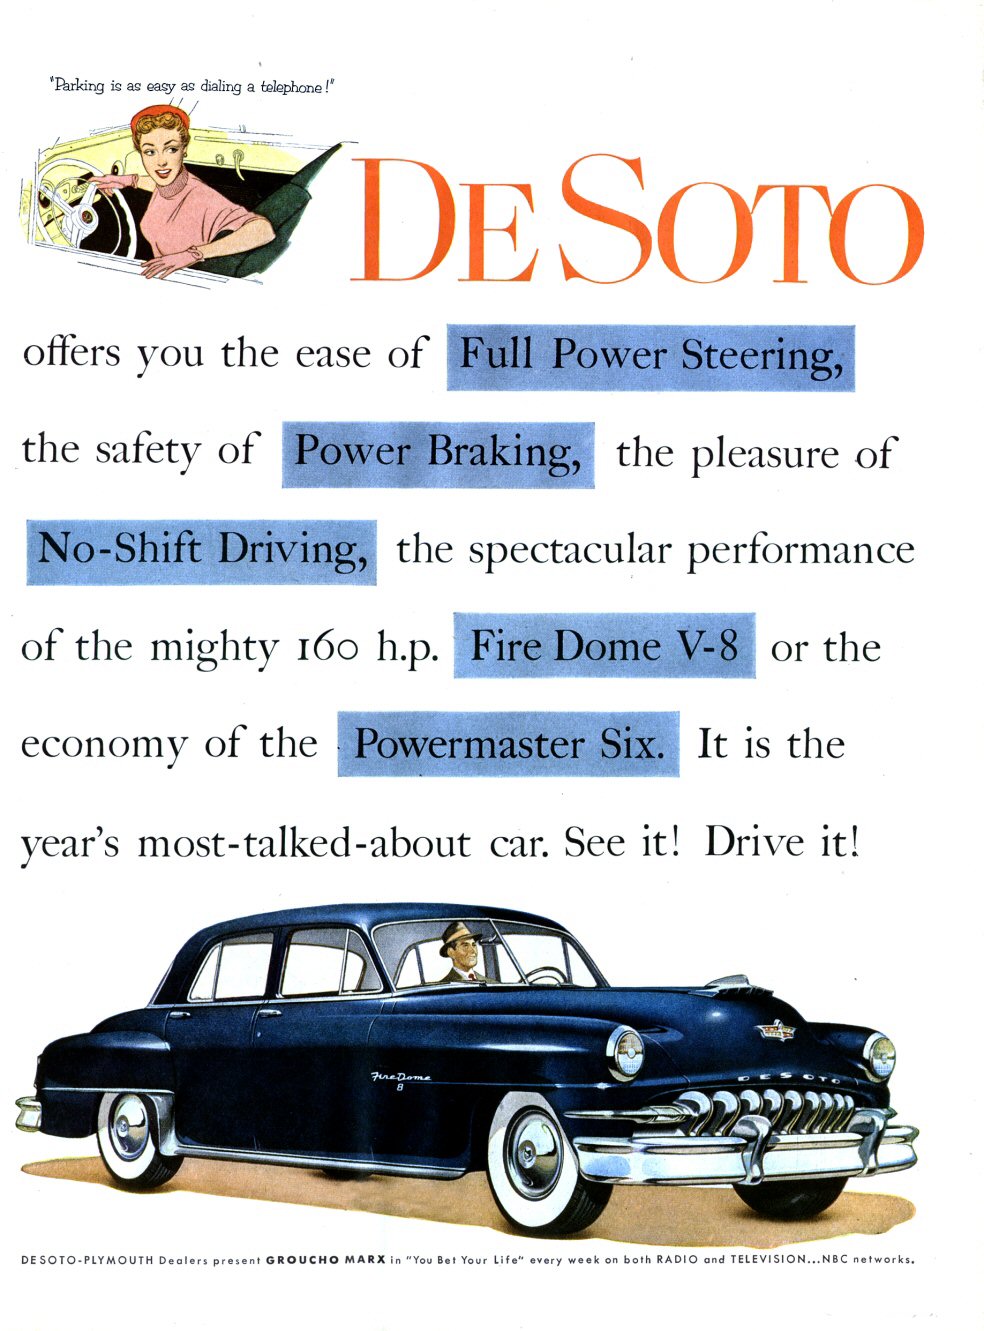 1952 American Auto Advertising